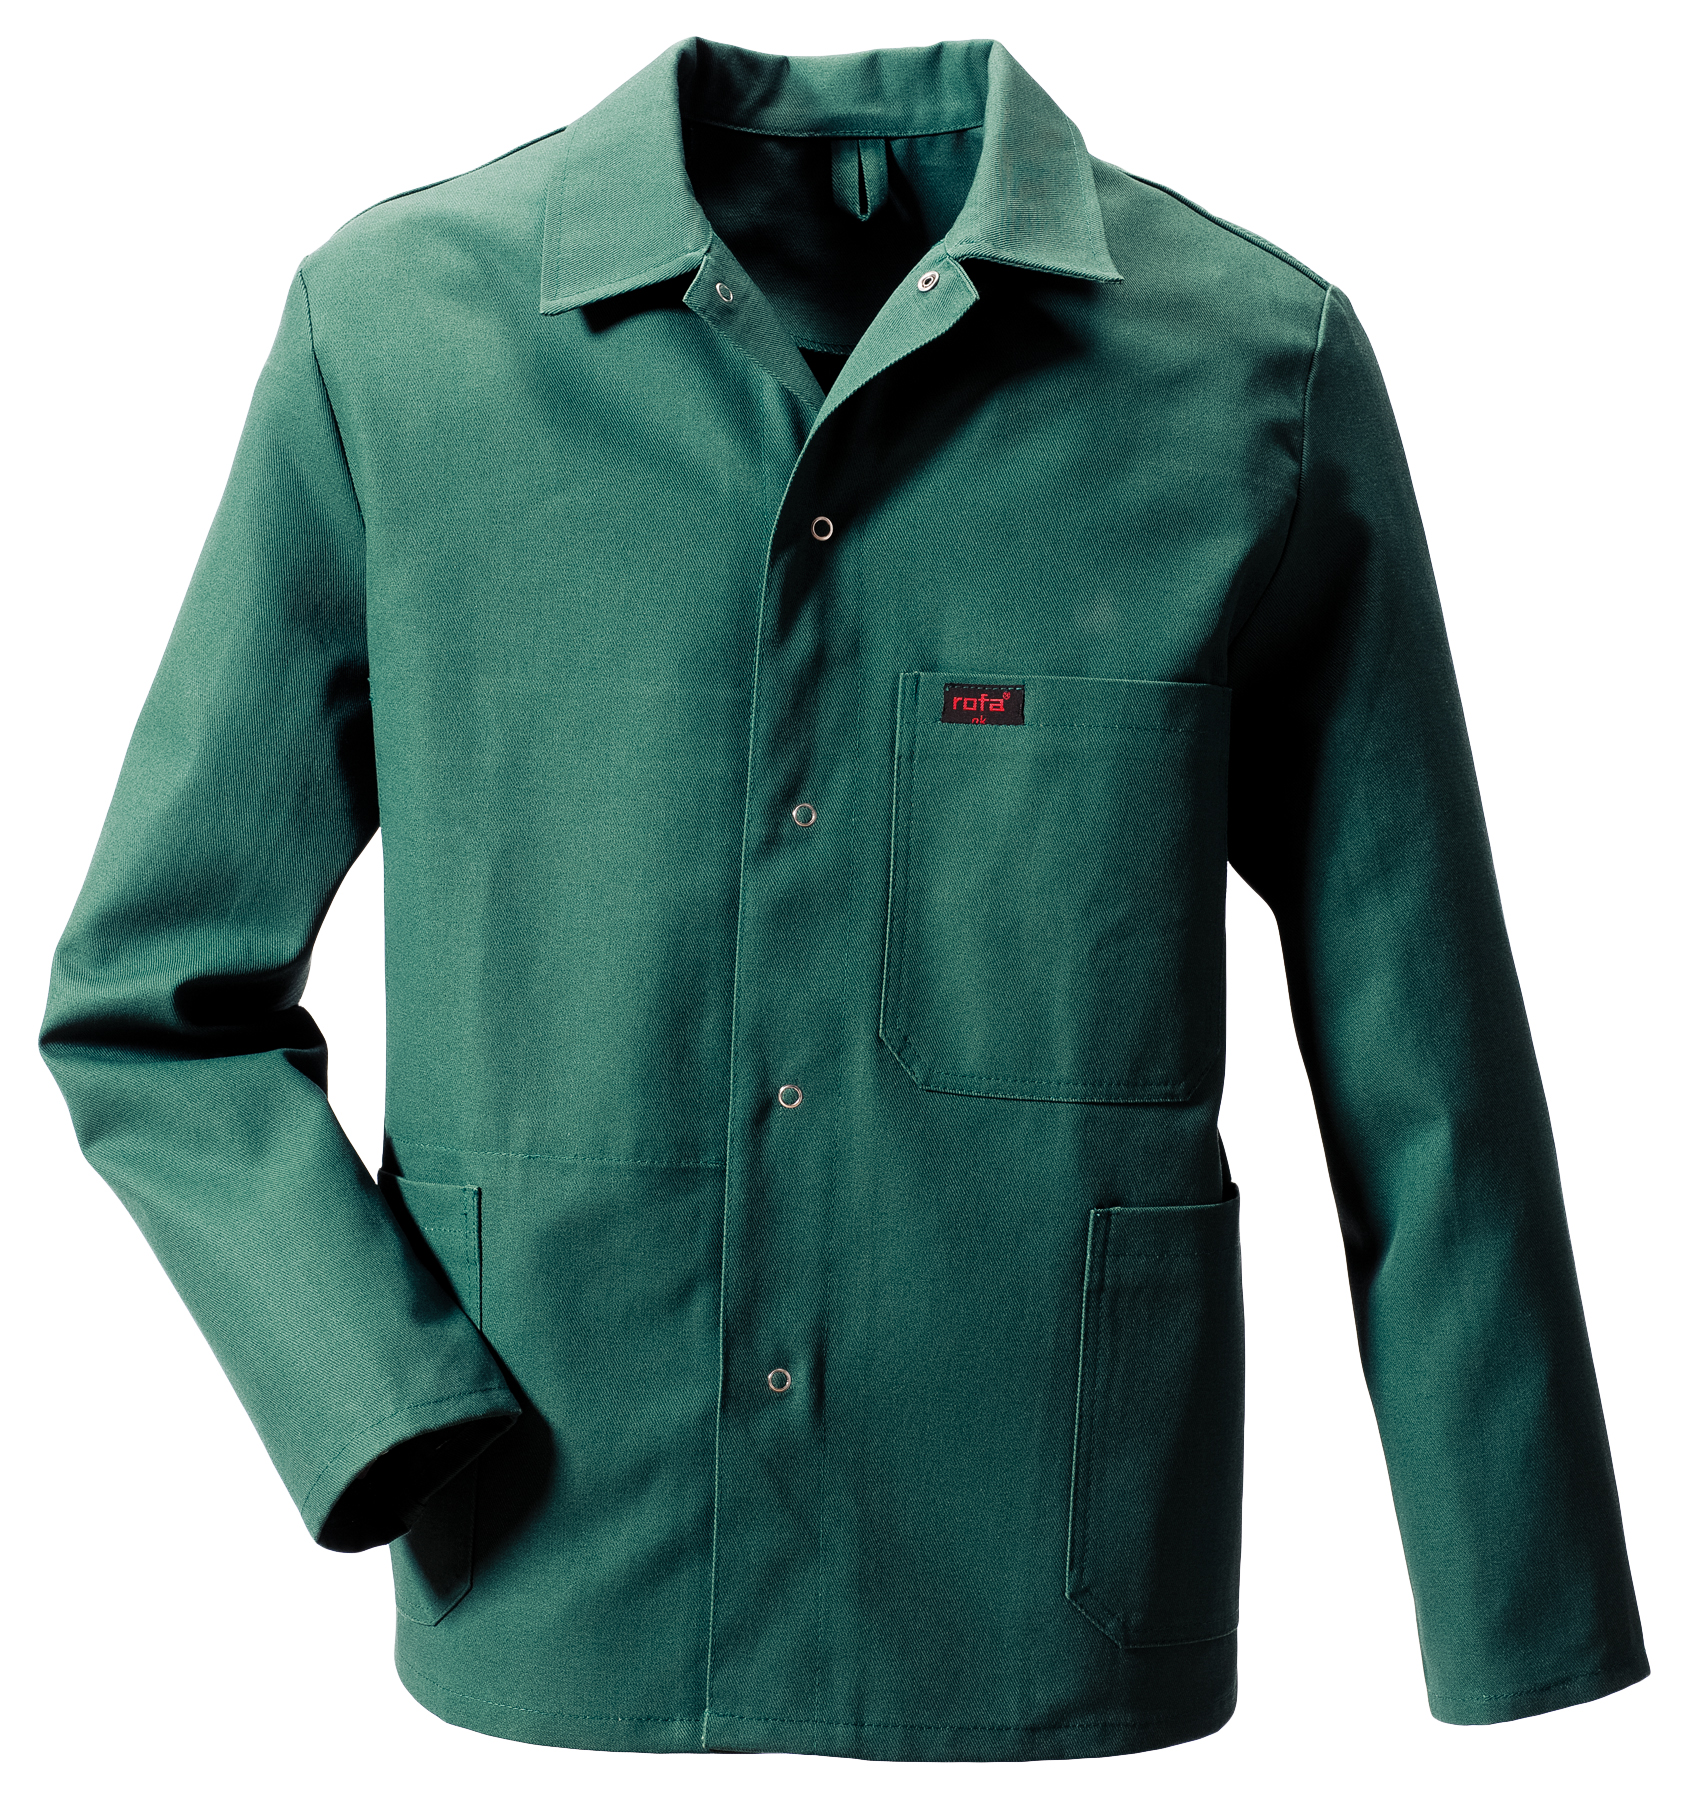 ROFA Bundjacke Arbeitsjacke Berufsjacke Schutzjacke Arbeitskleidung Berufskleidung grün